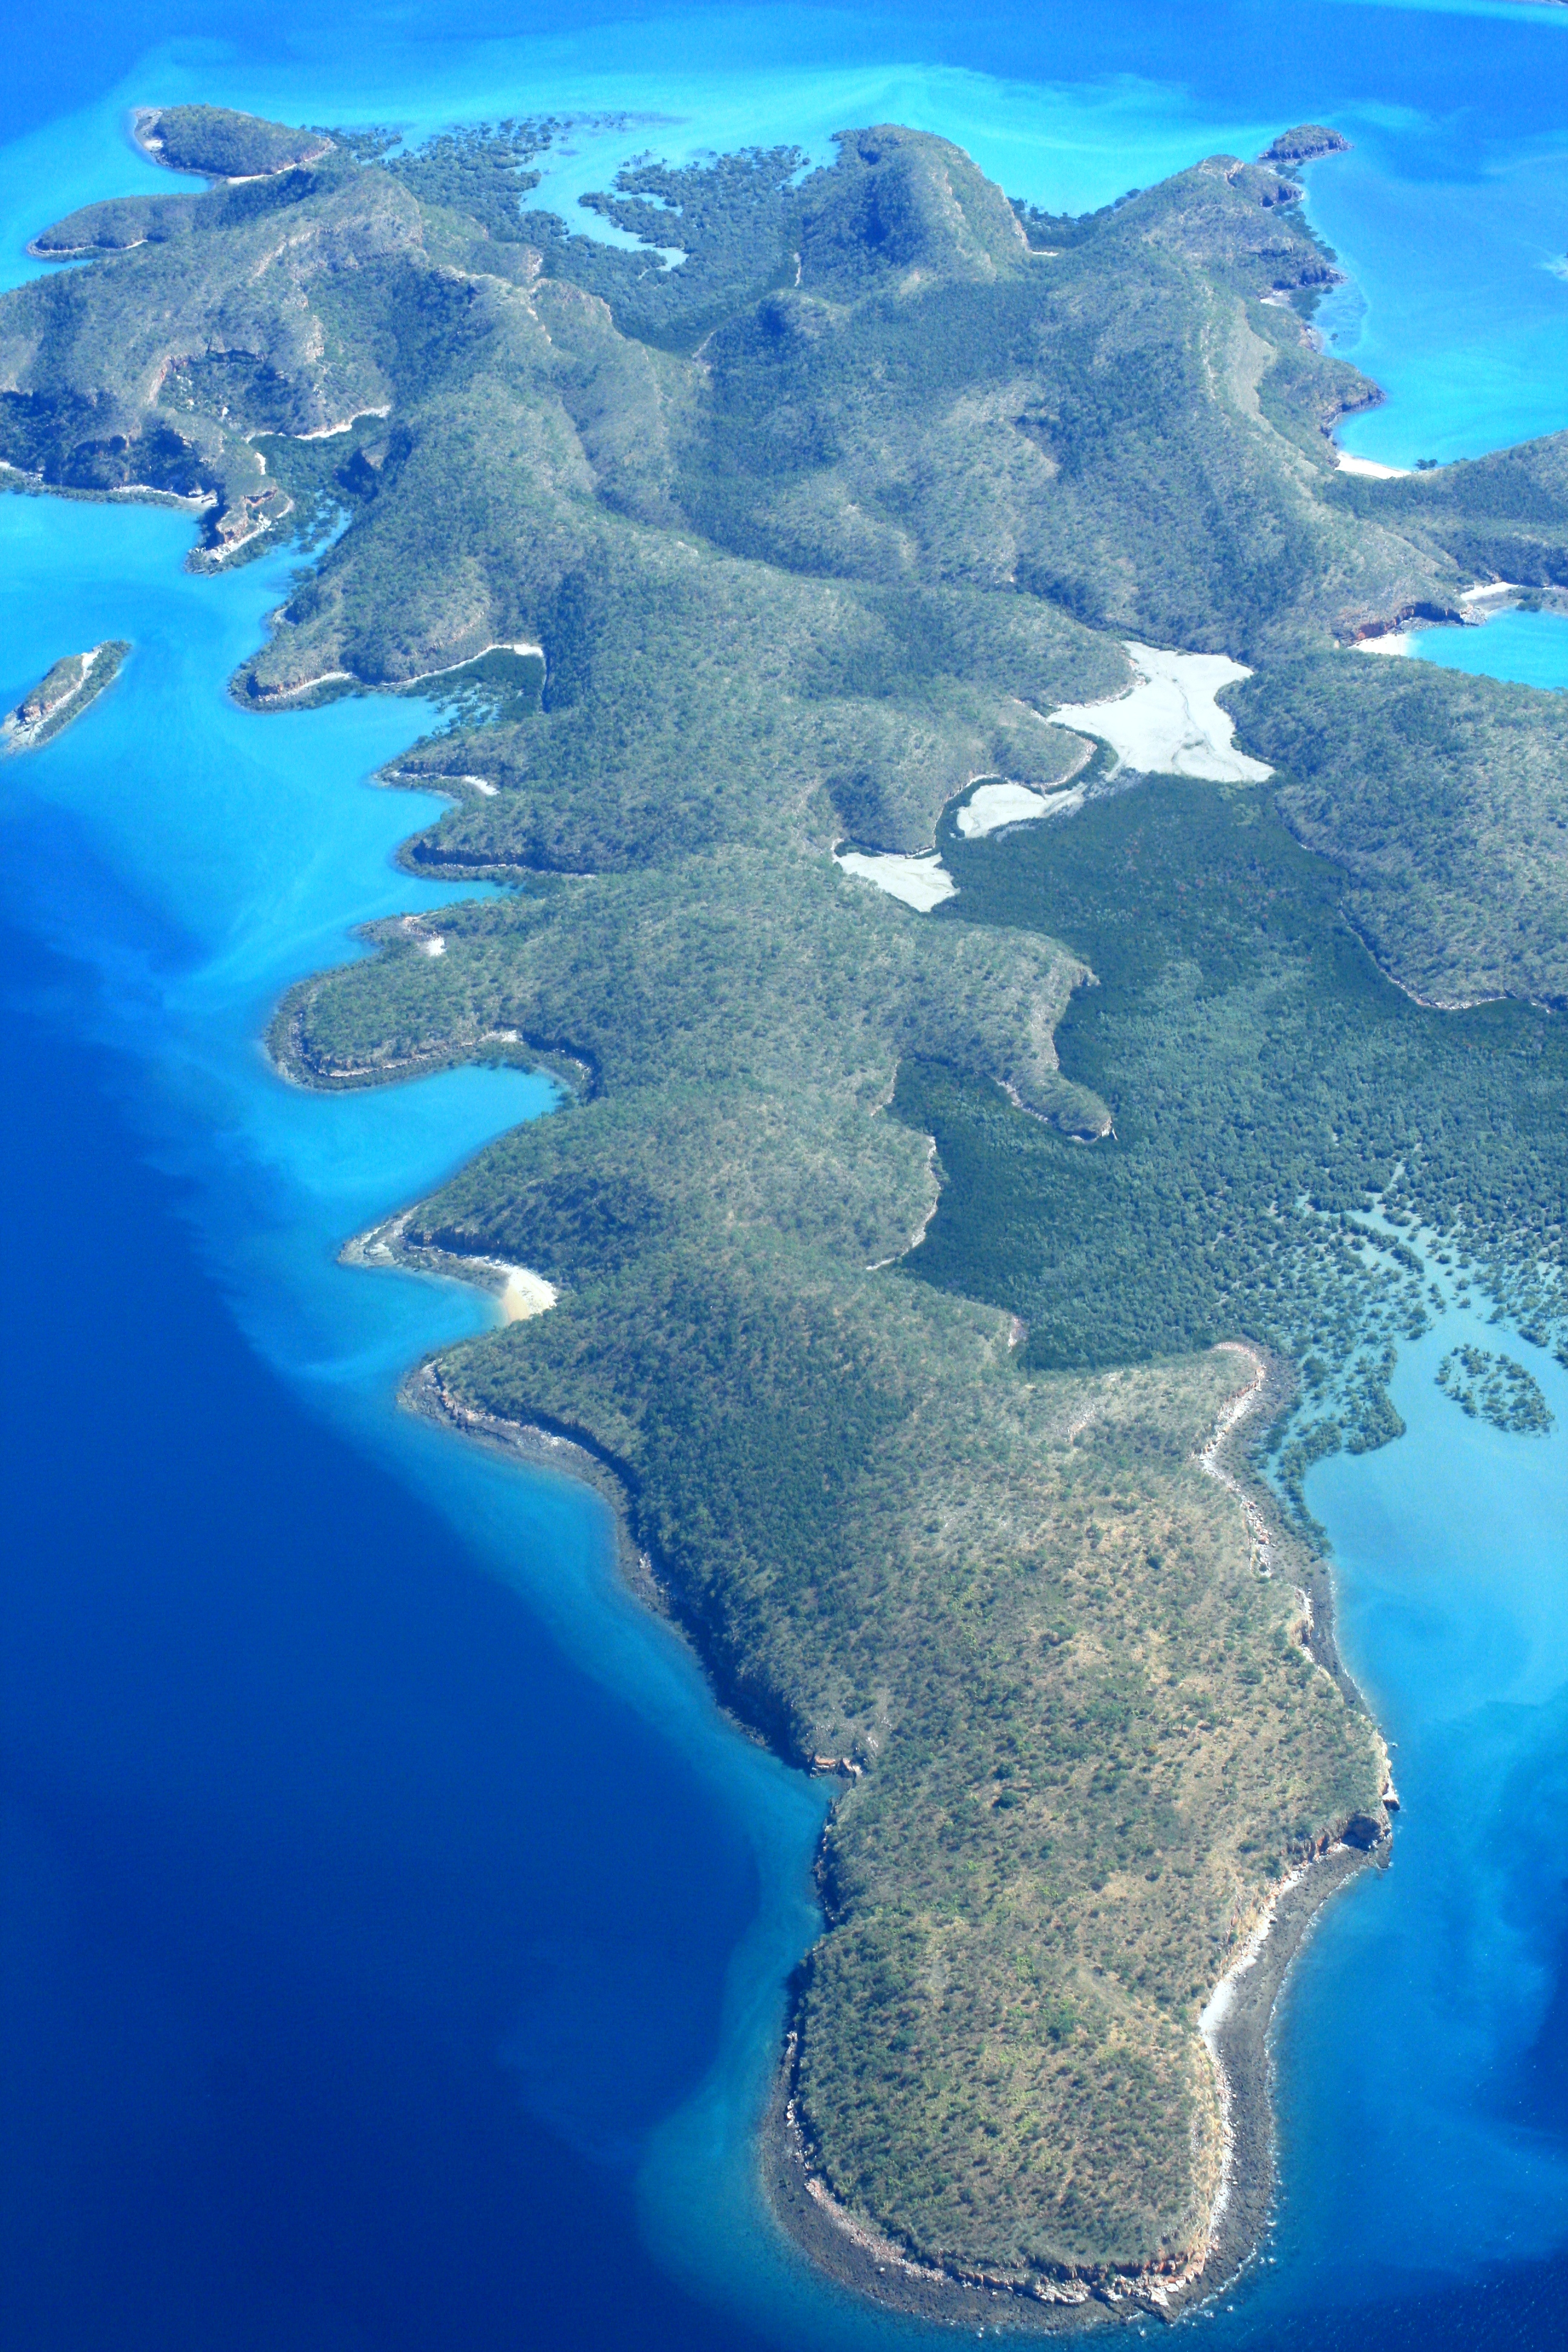 Remote island. Острова Эритреи. Bay of Islands, New Zealand, Исландия. Middle Island (Western Australia).